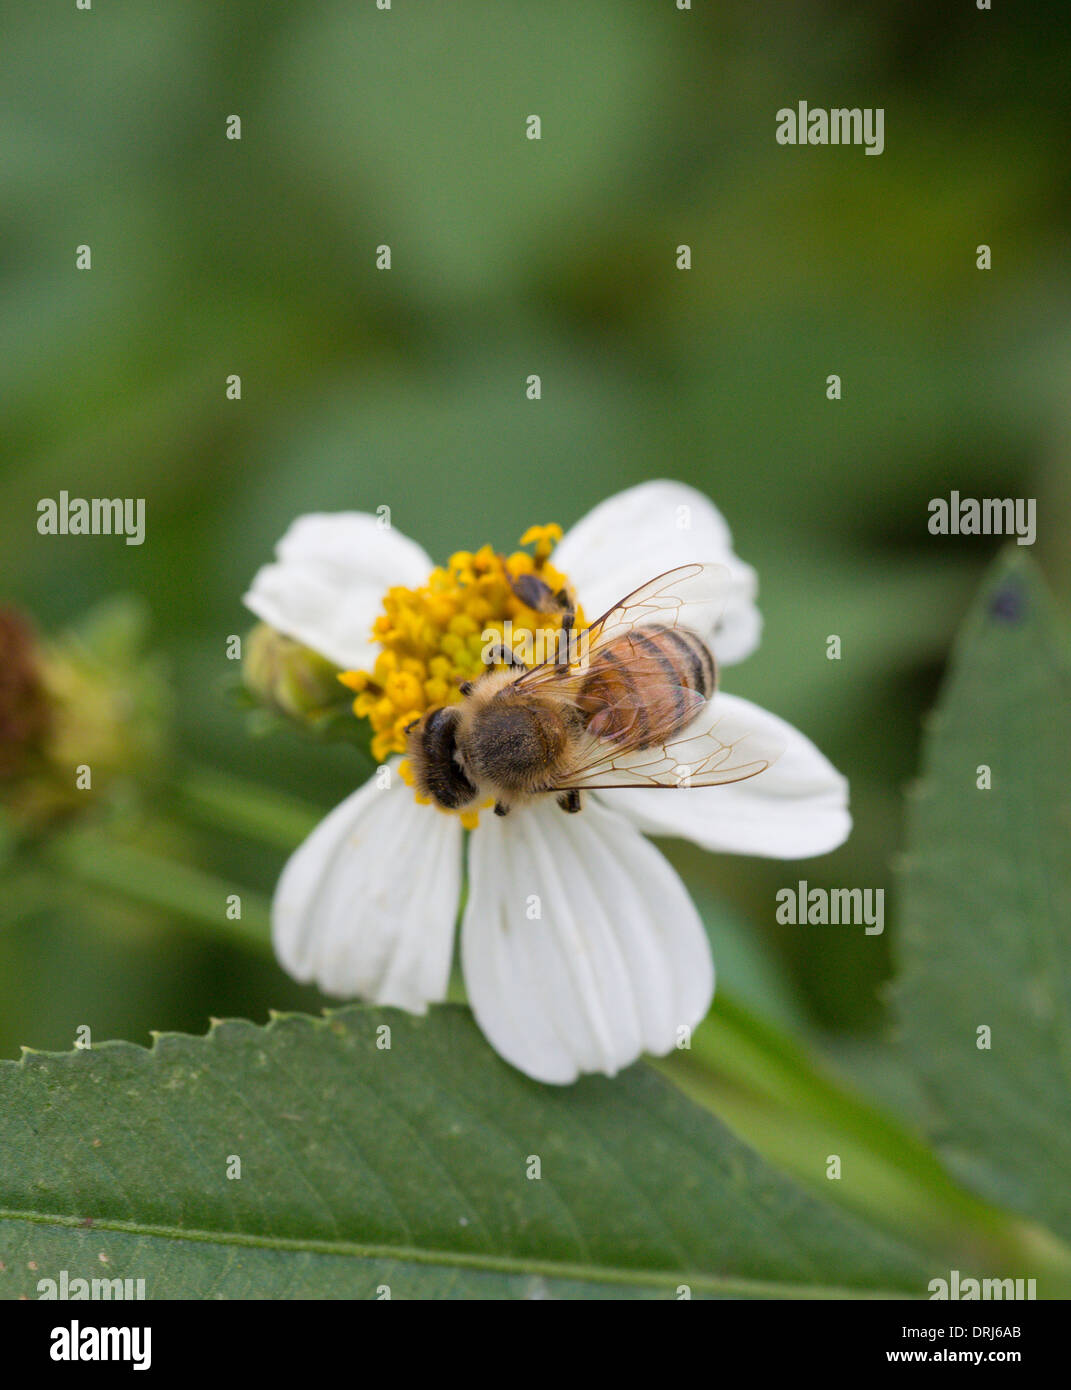 Closeup of honeybee pollinating white flower Stock Photo